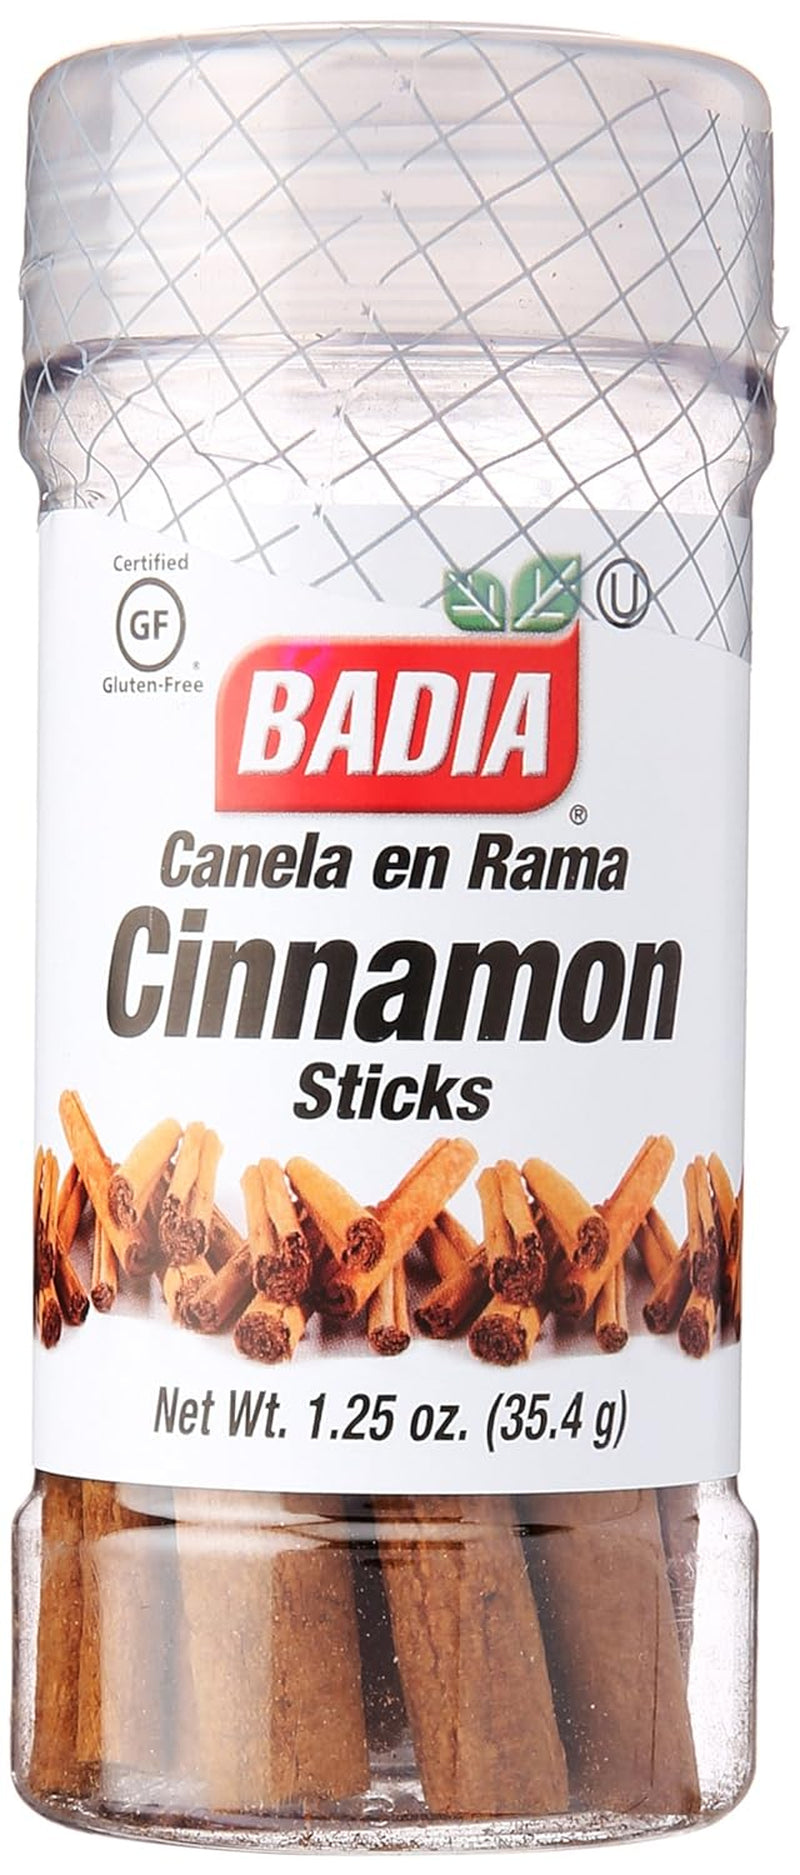 Cinnamon Sticks, 1.25 Oz.